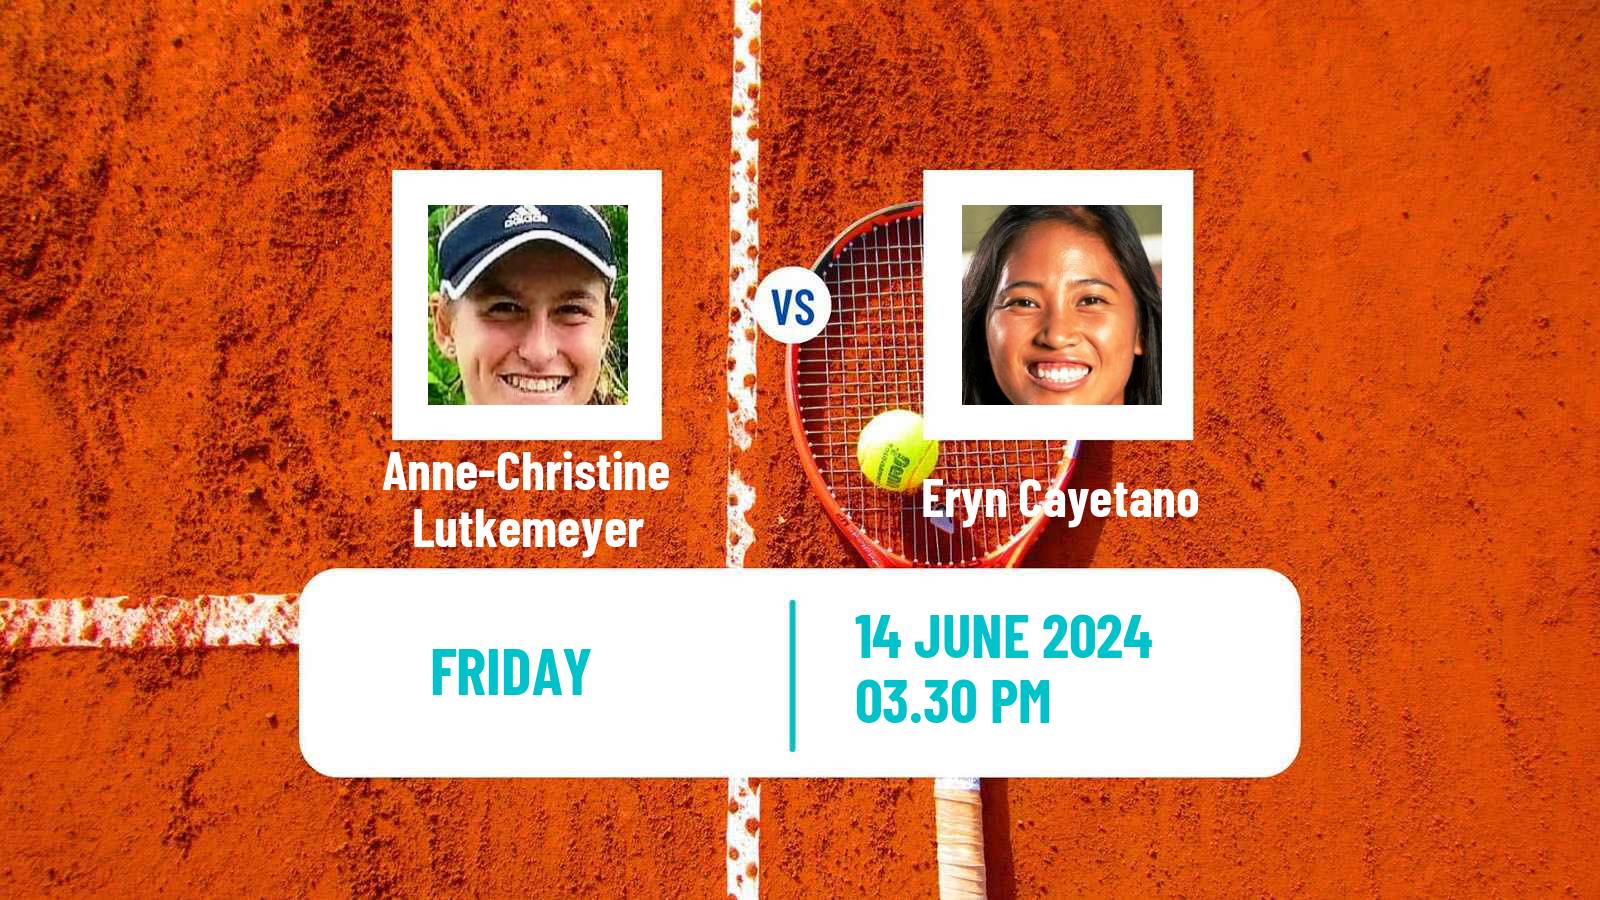 Tennis ITF W15 San Diego Ca 3 Women Anne-Christine Lutkemeyer - Eryn Cayetano